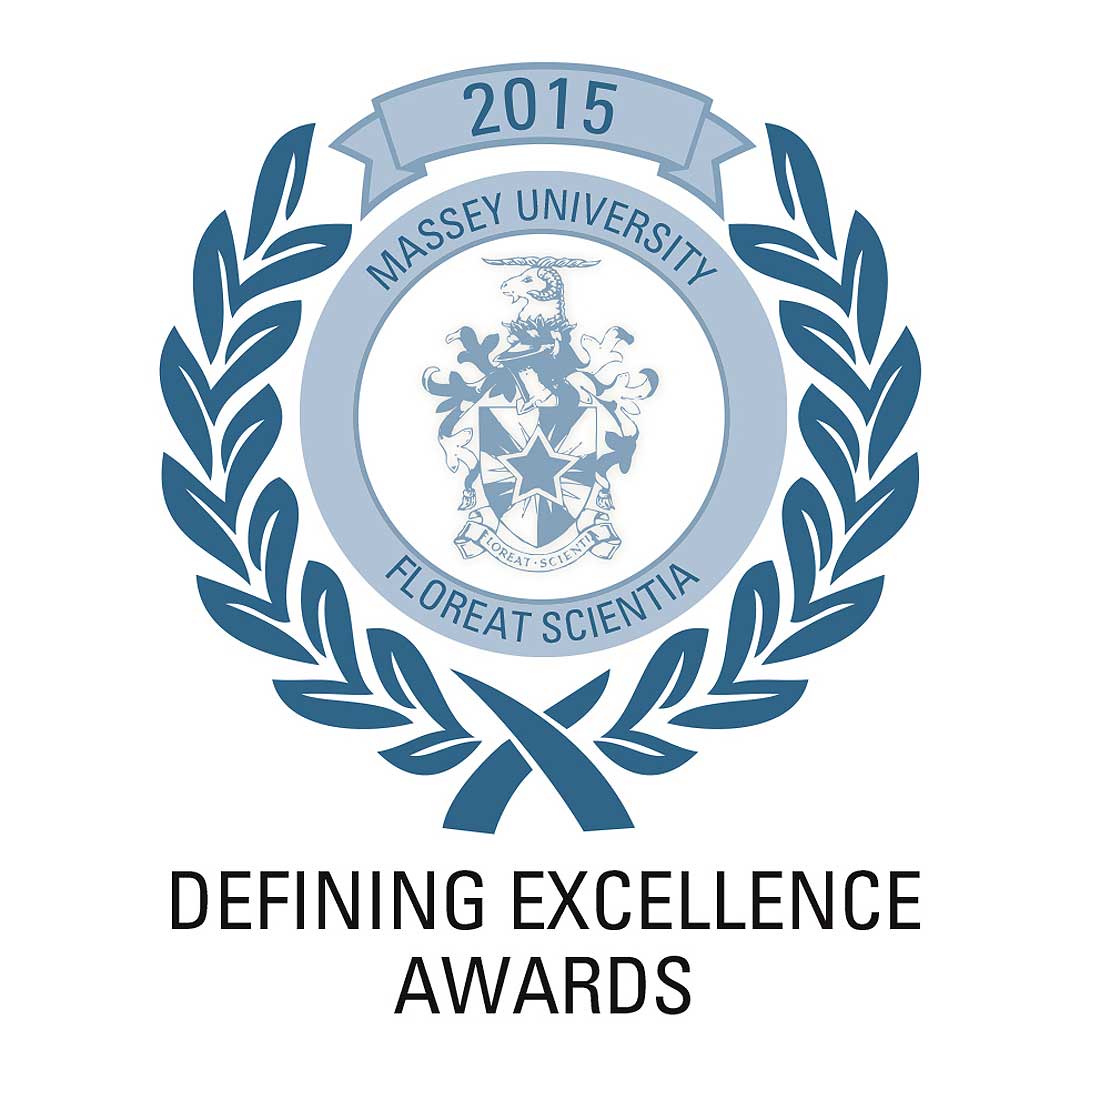 New Partnership Excellence Award announced - Massey University